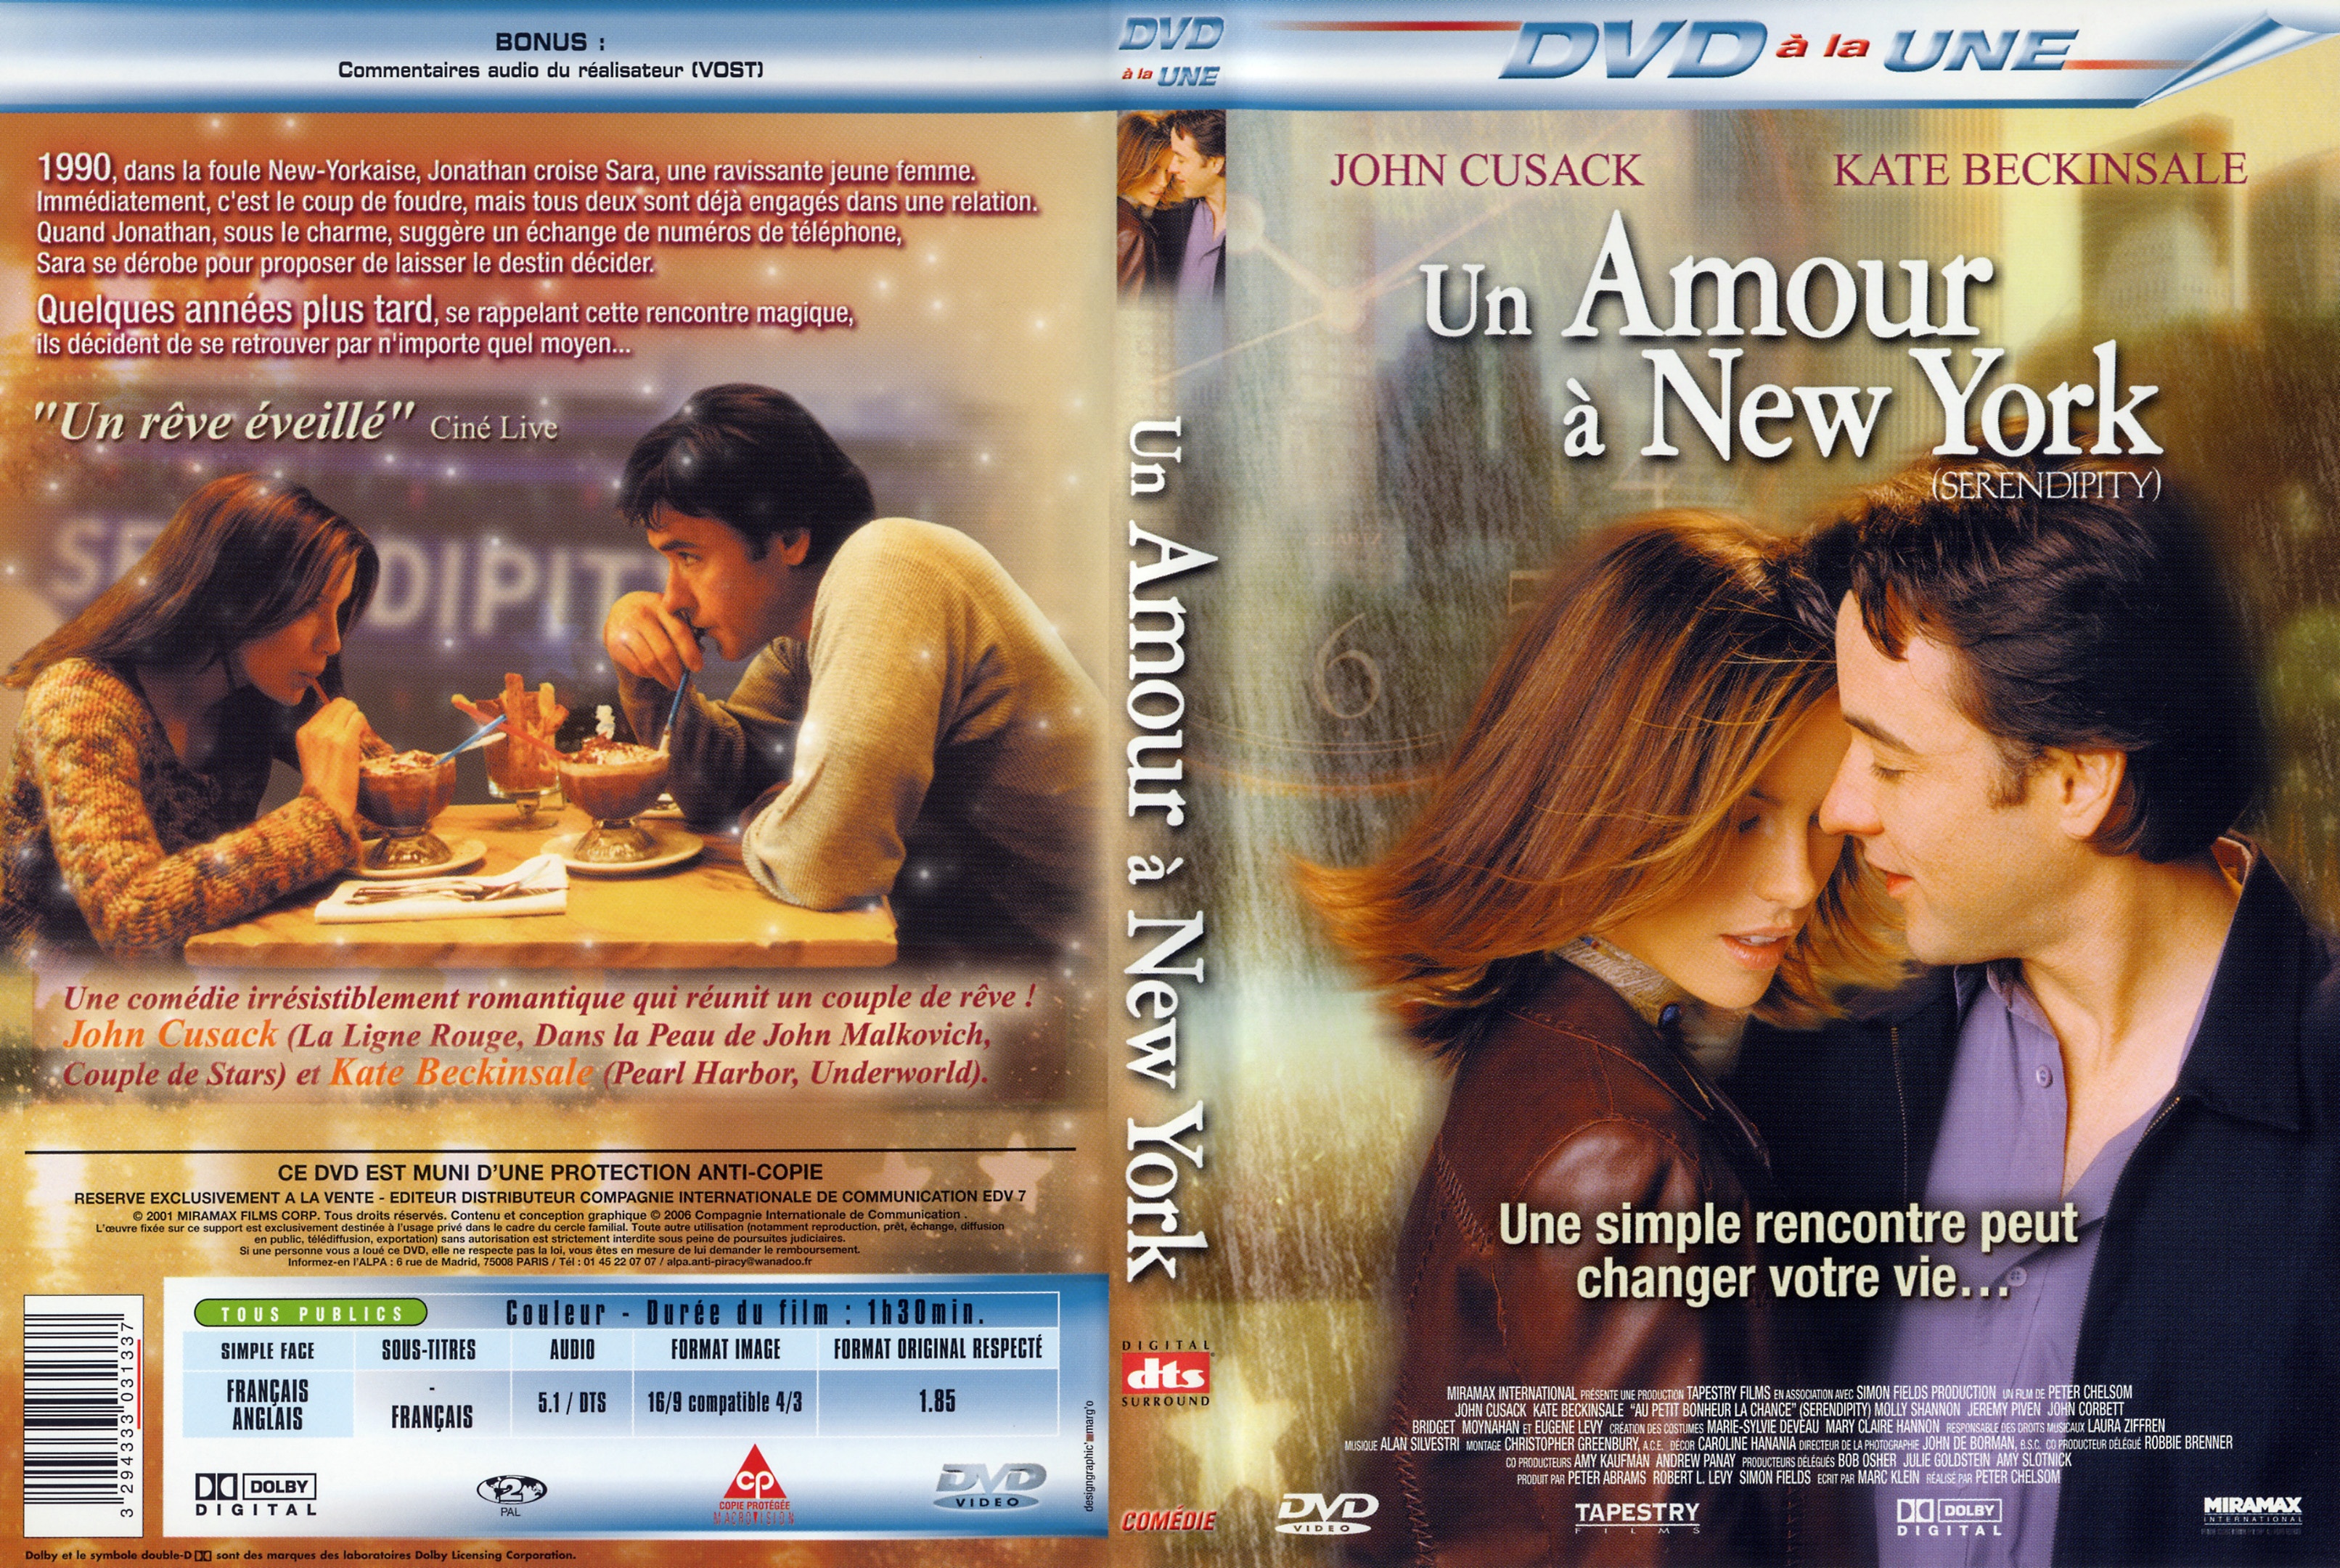 Jaquette DVD Un amour  New-York v2